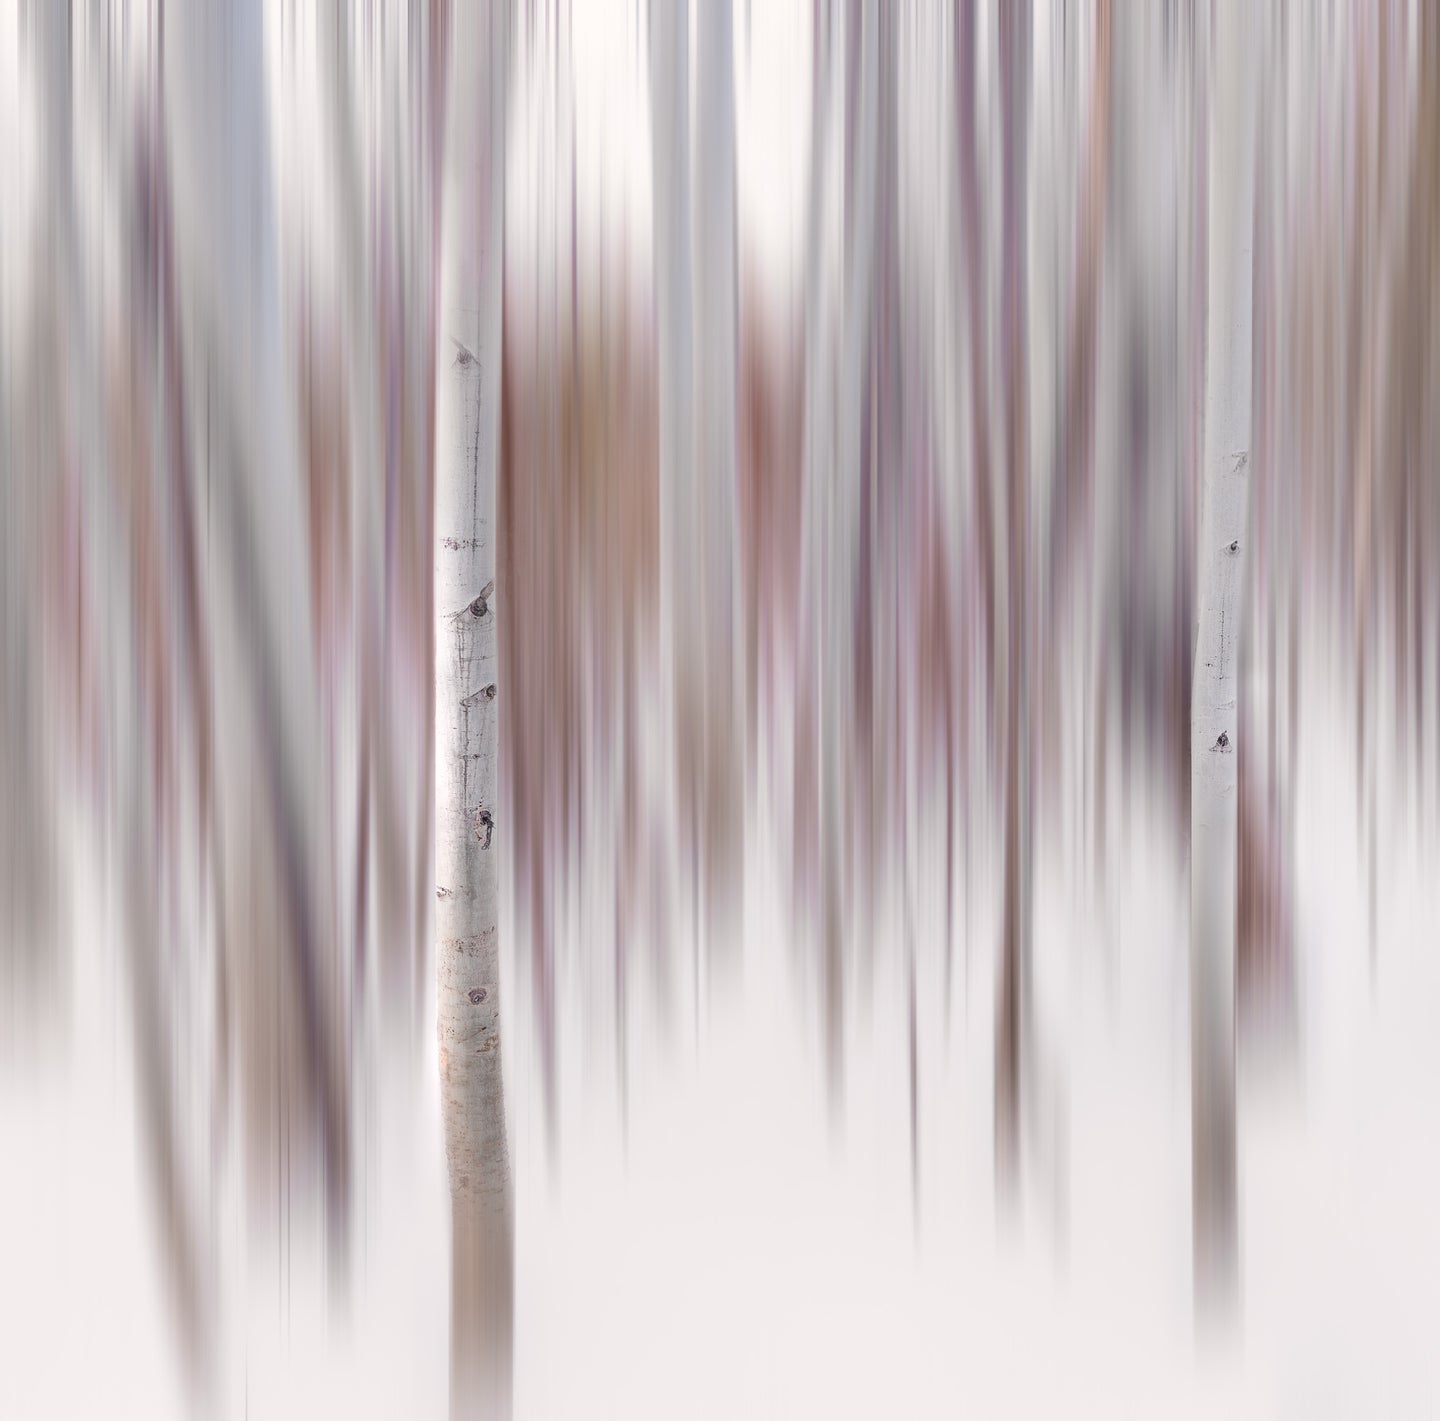 Aspen Impressions, Ghosts of Tahoe - Francesco Emanuele Carucci Photography